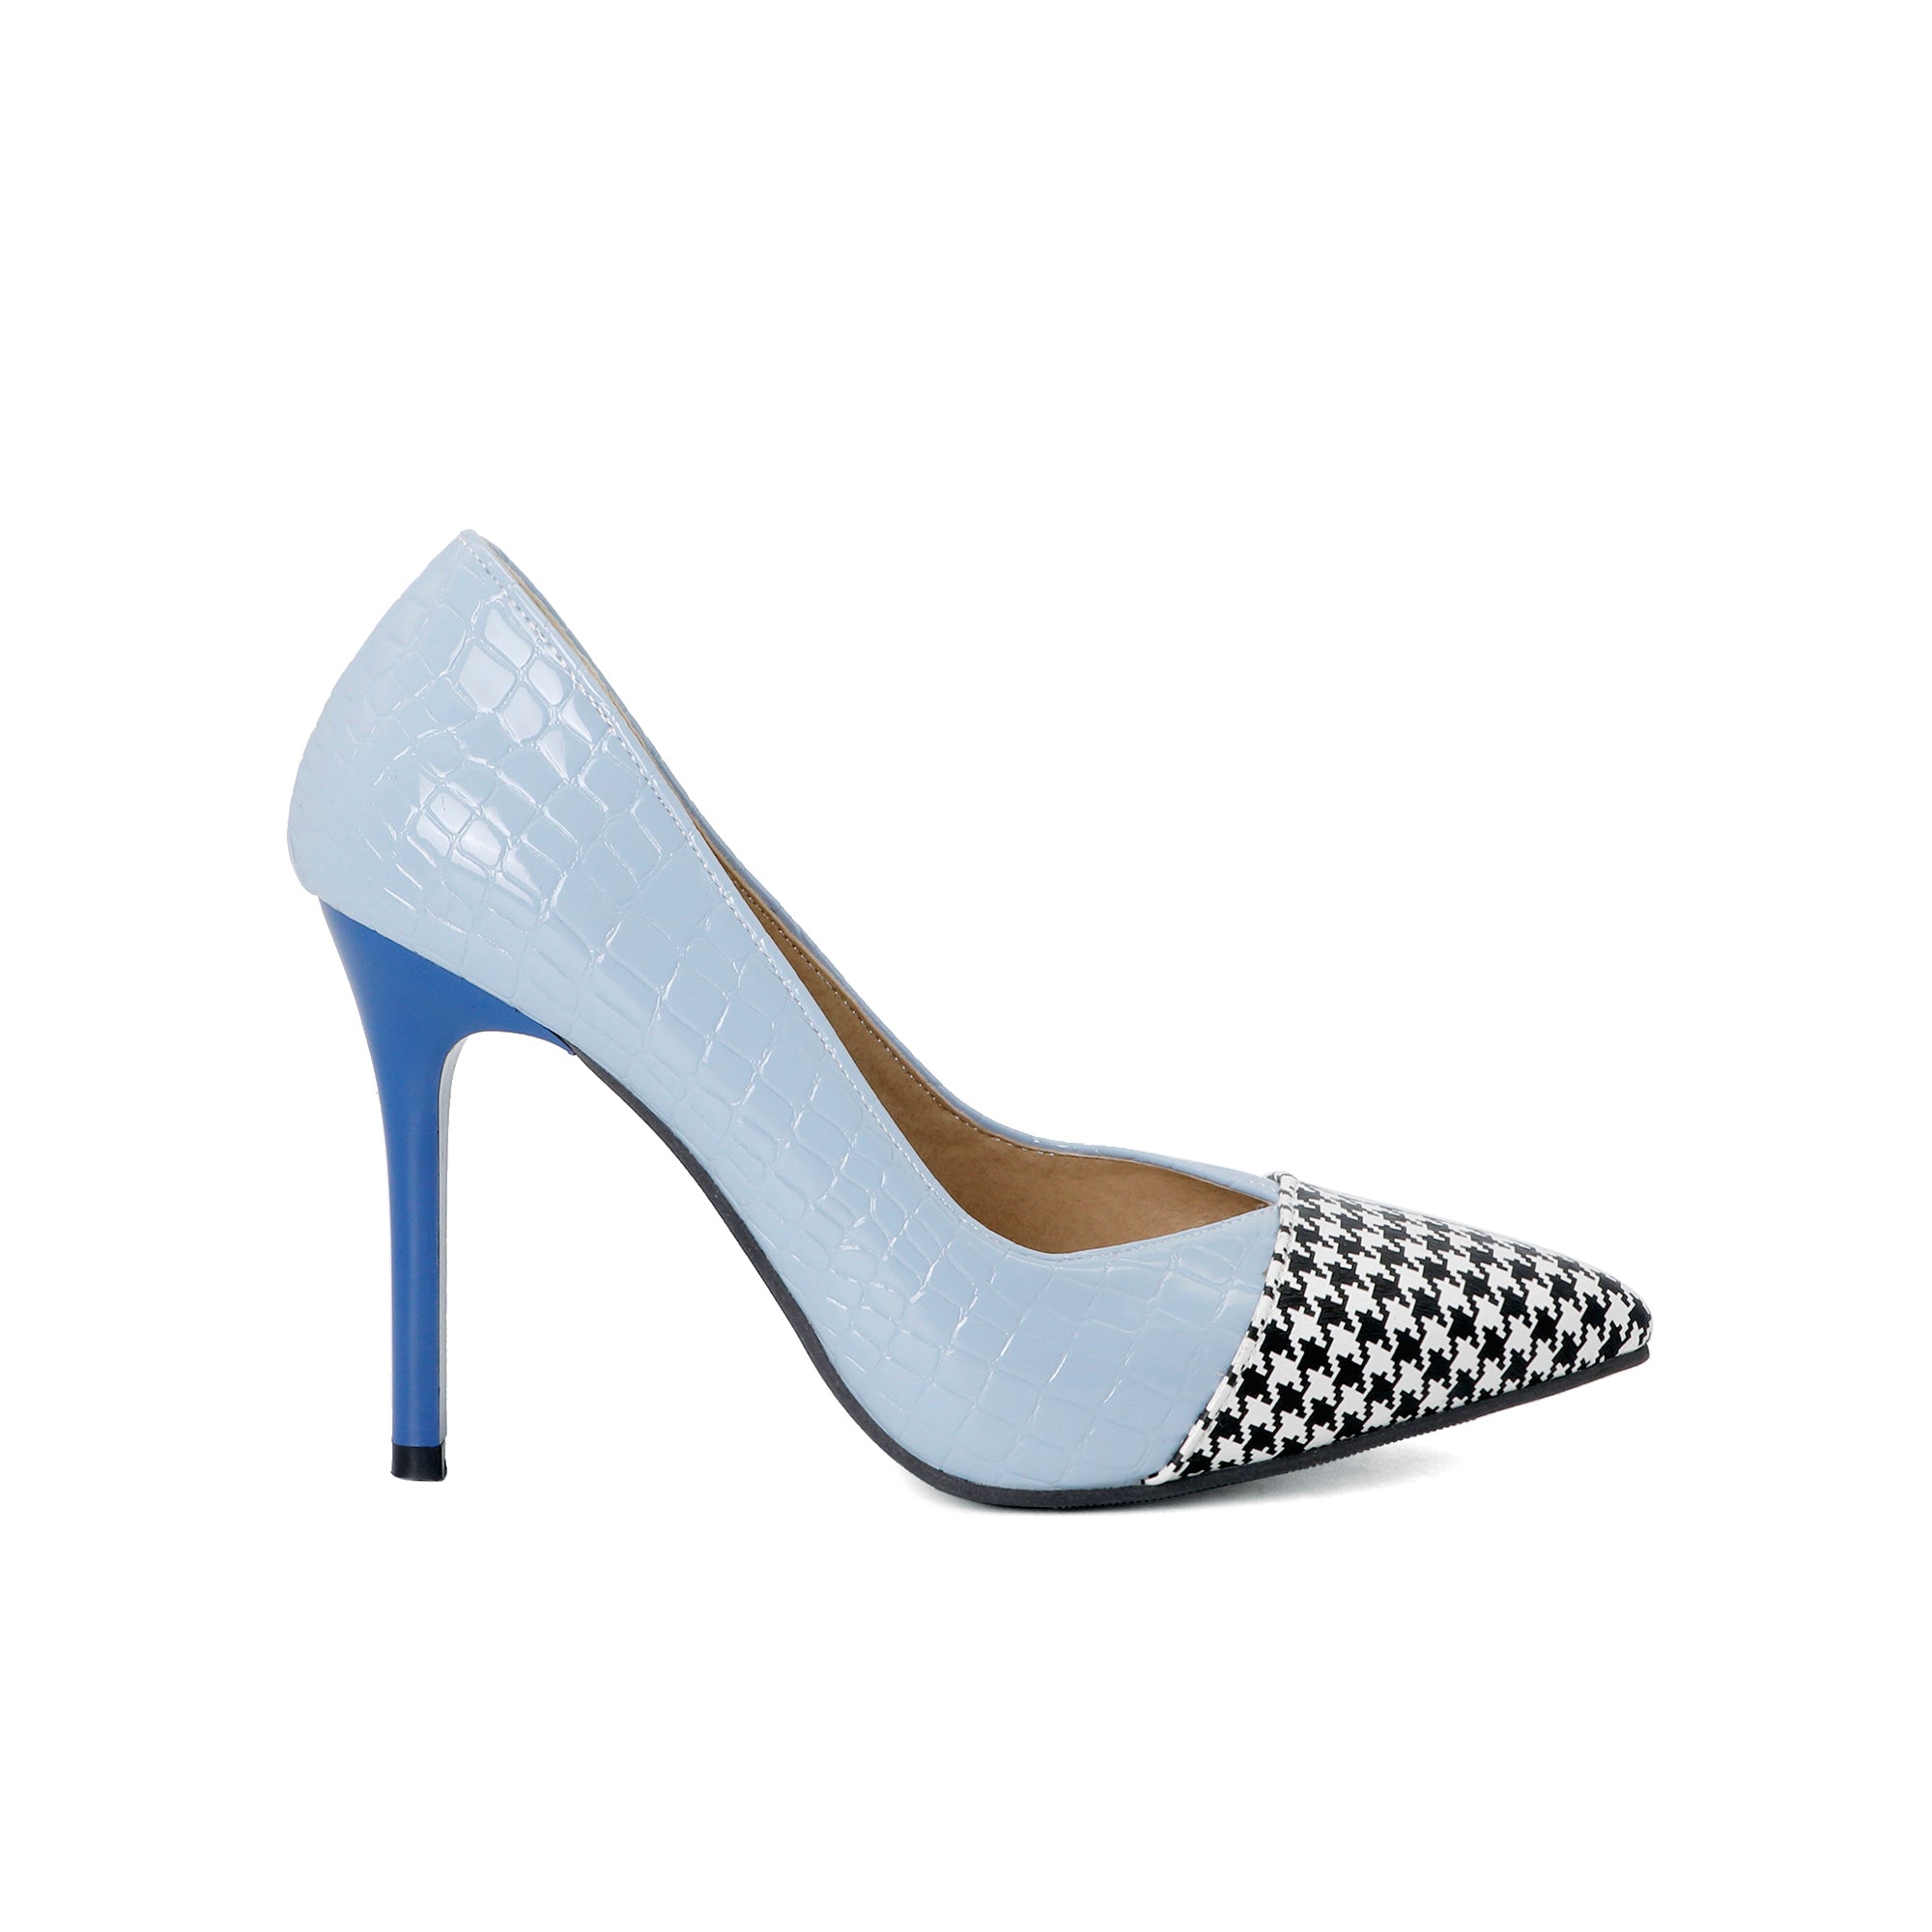 Bigsizeheels Houndstooth spliced pointy heels - Blue freeshipping - bigsizeheel®-size5-size15 -All Plus Sizes Available!